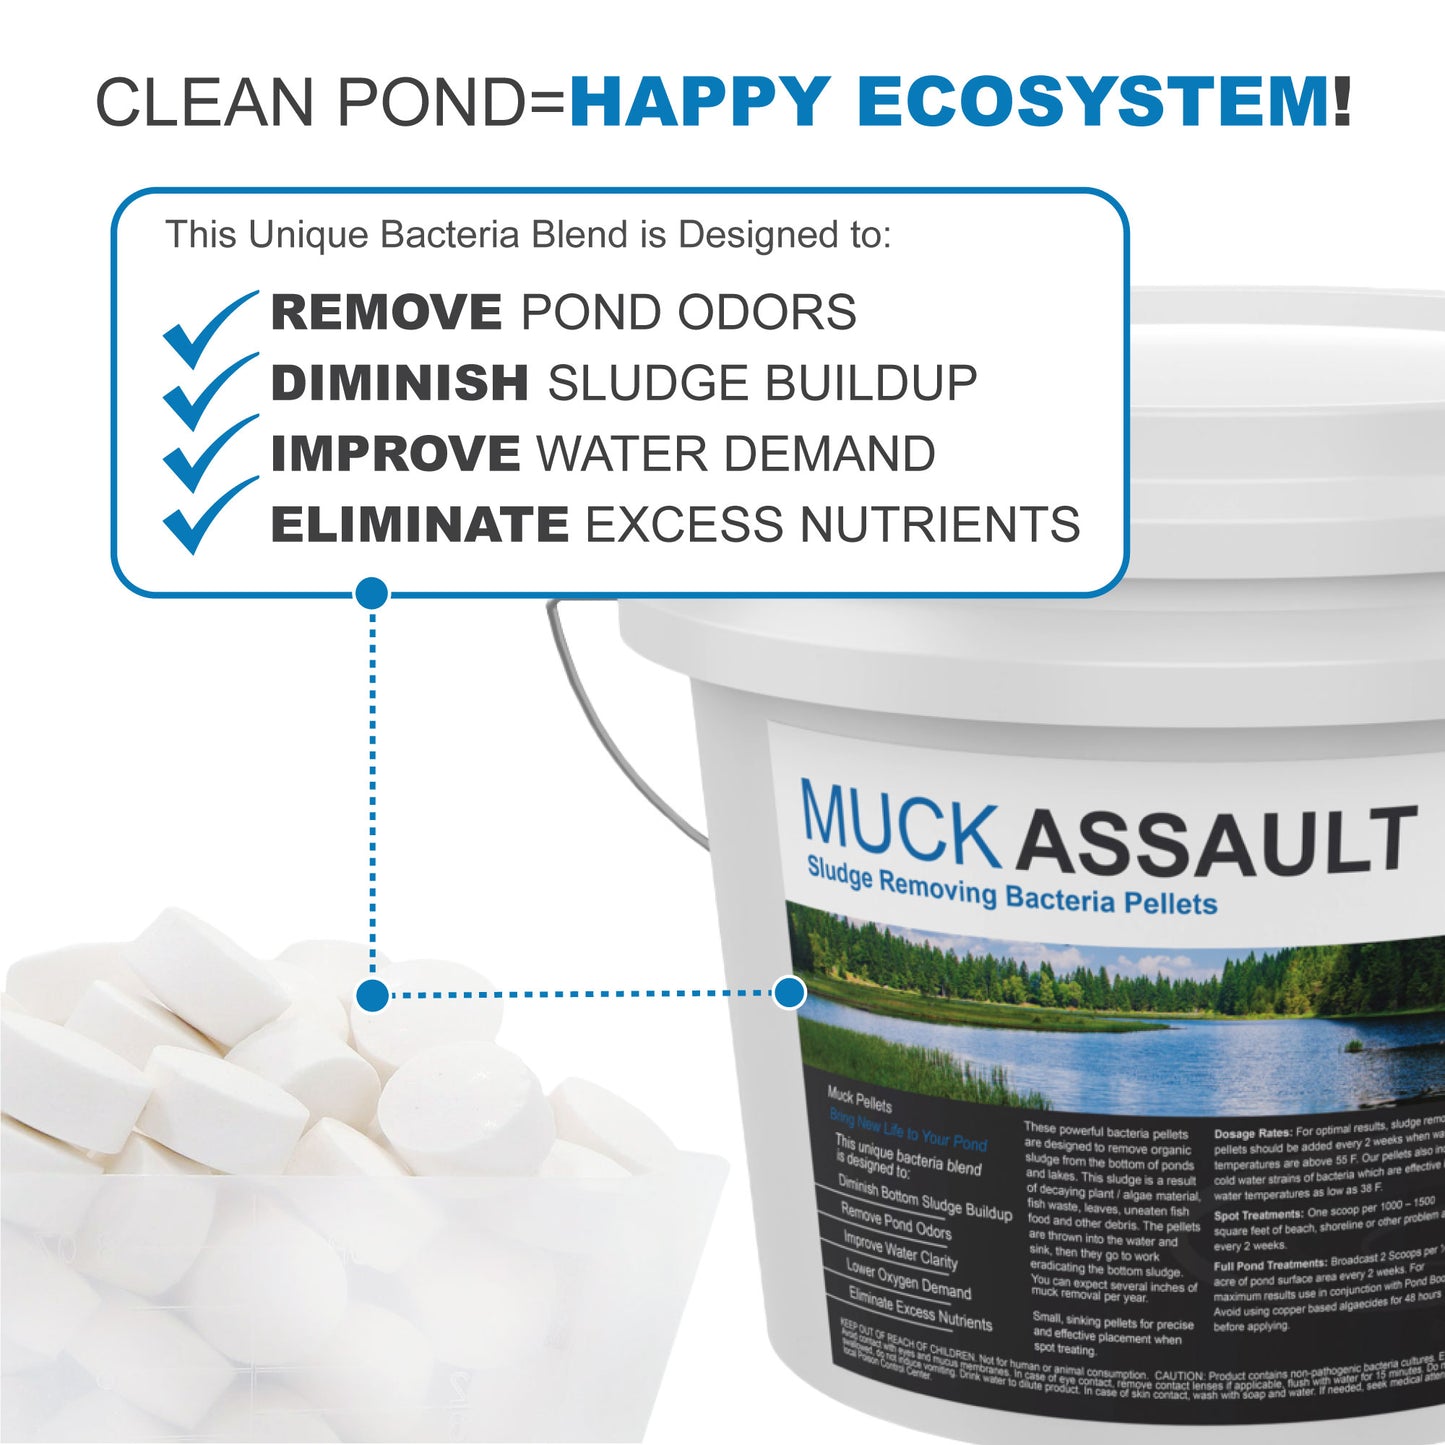 Muck Assault Sludge Remover Pellets - Living Water Aeration